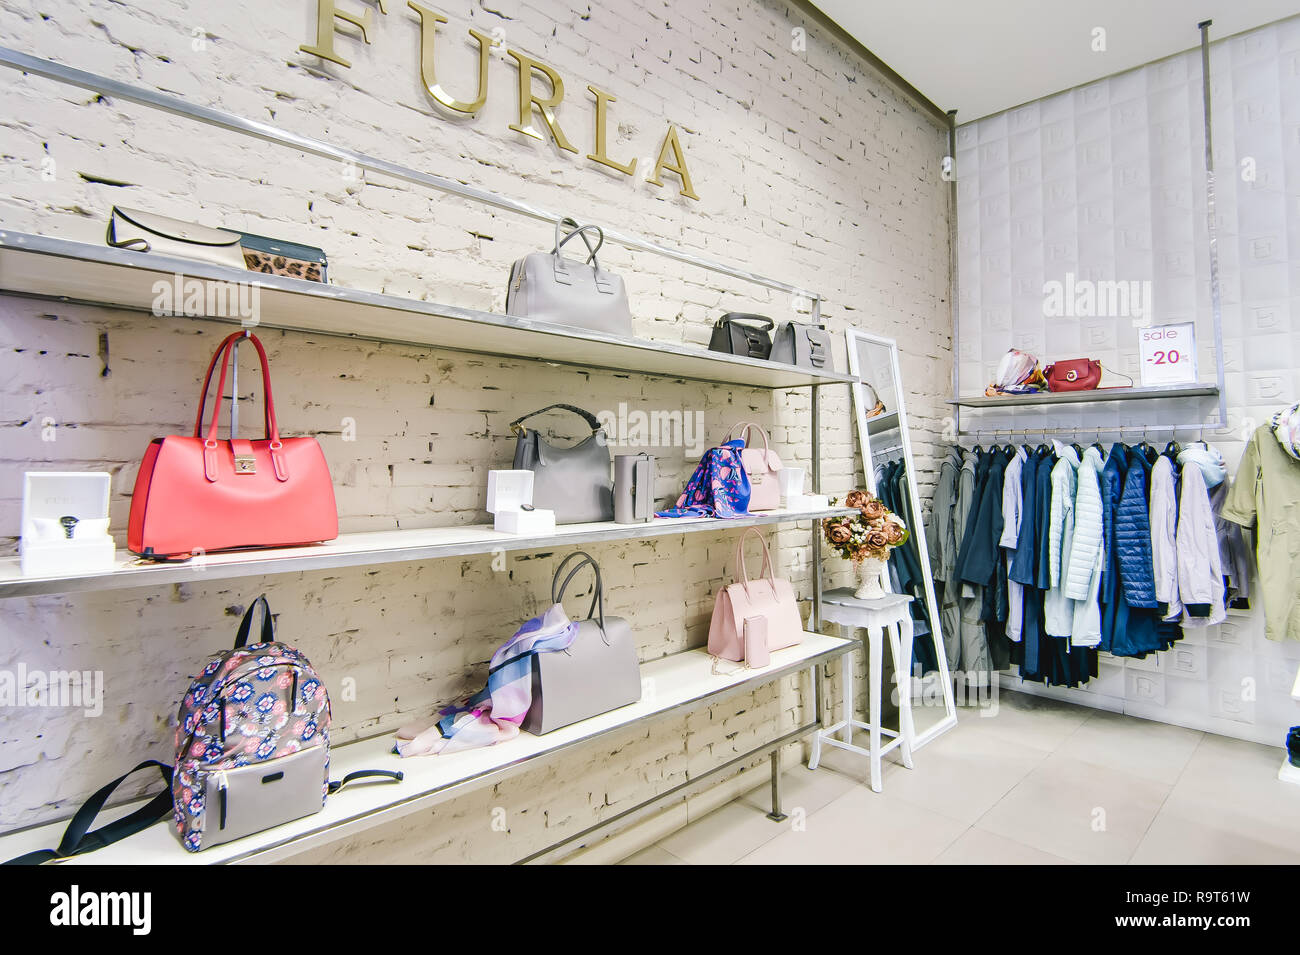 Russia, Novosibirsk - April 25, 2018: interior of women's clothing and  accessories store boutique EMPORIO / FURLA handbags ladies bags Stock Photo  - Alamy